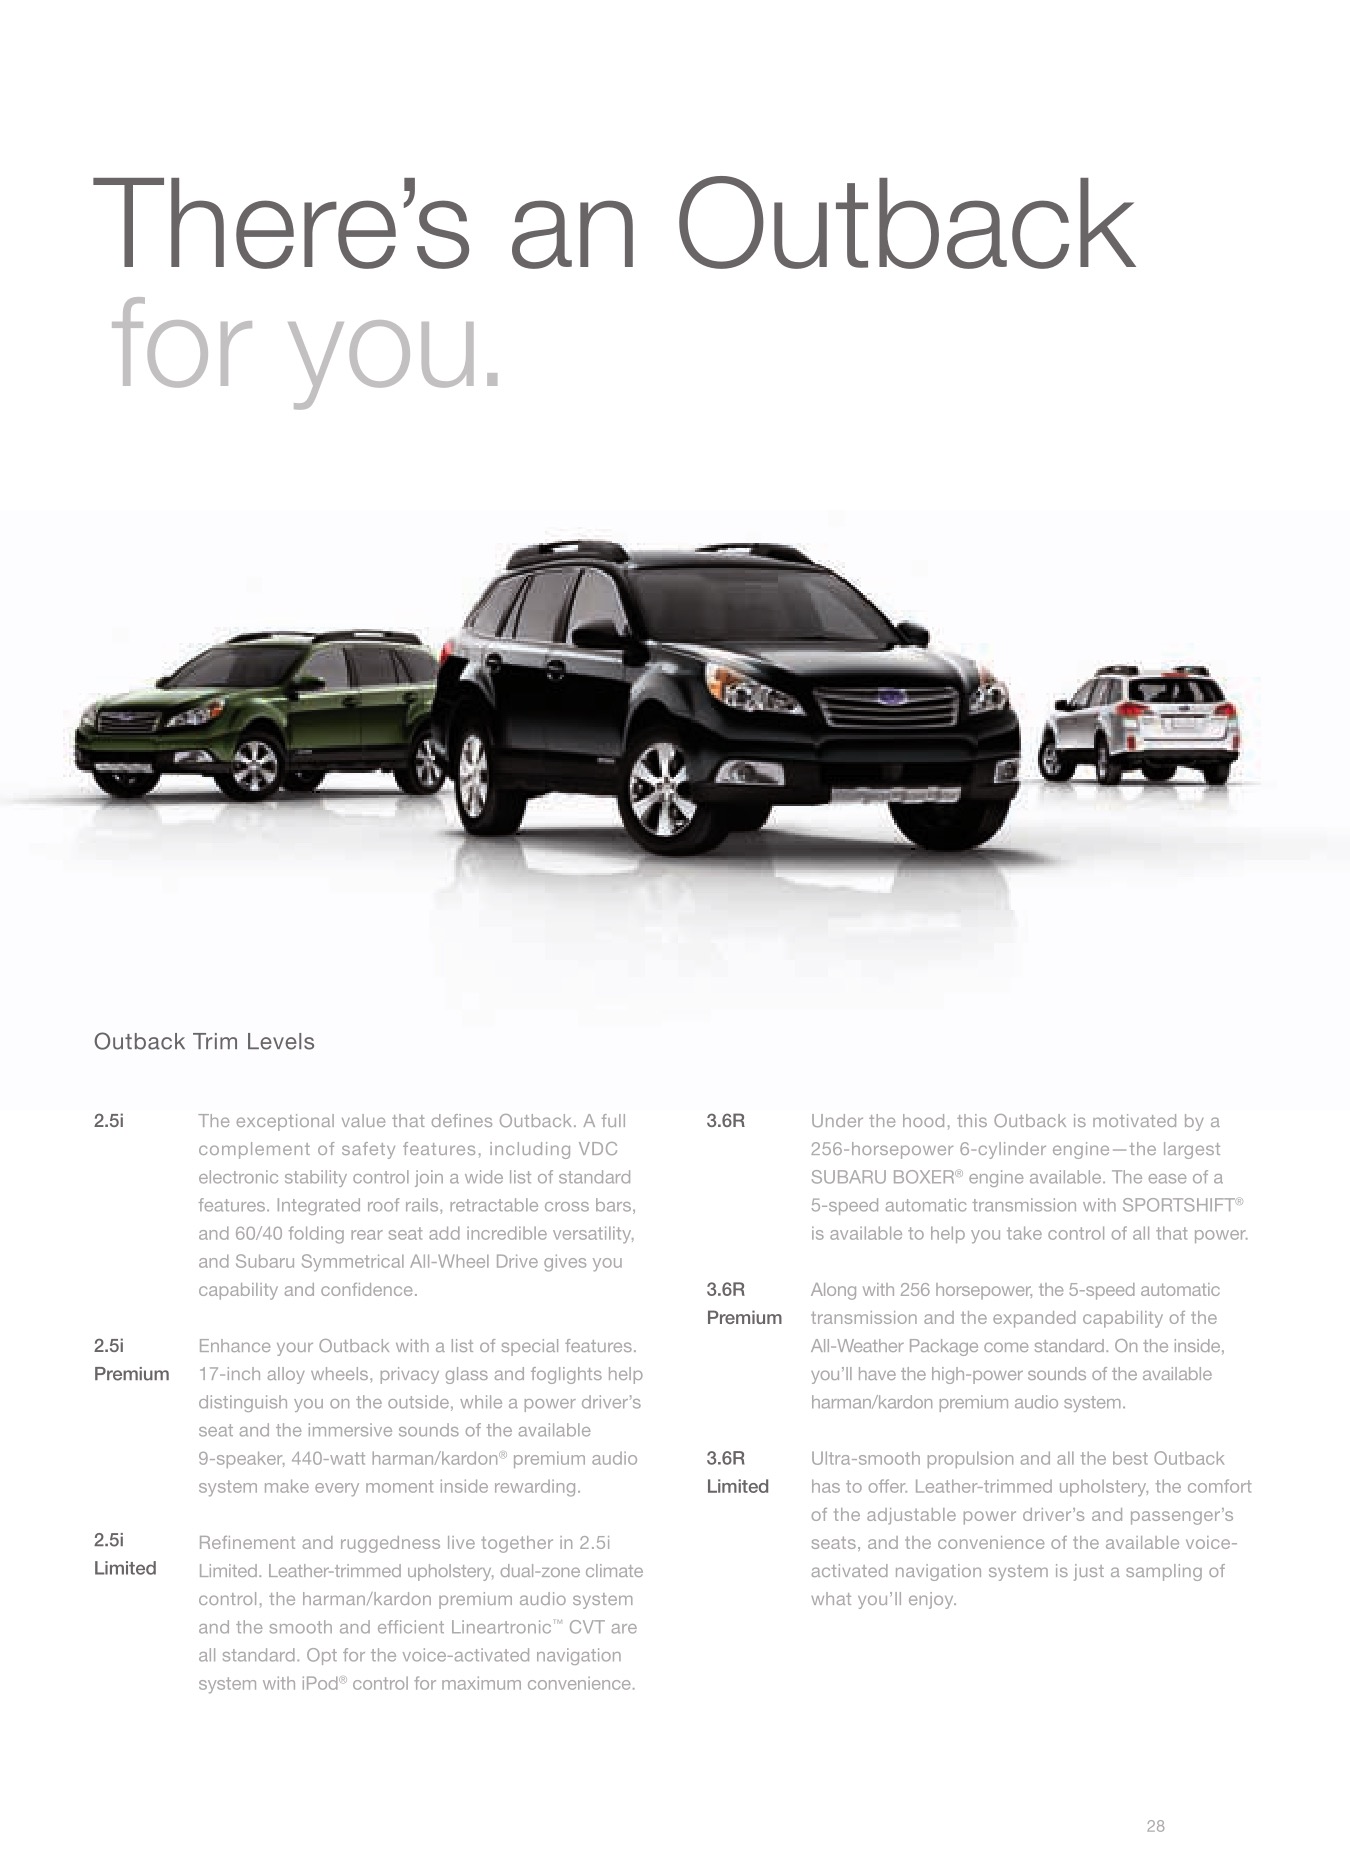 2010 Subaru Outback Brochure Page 18